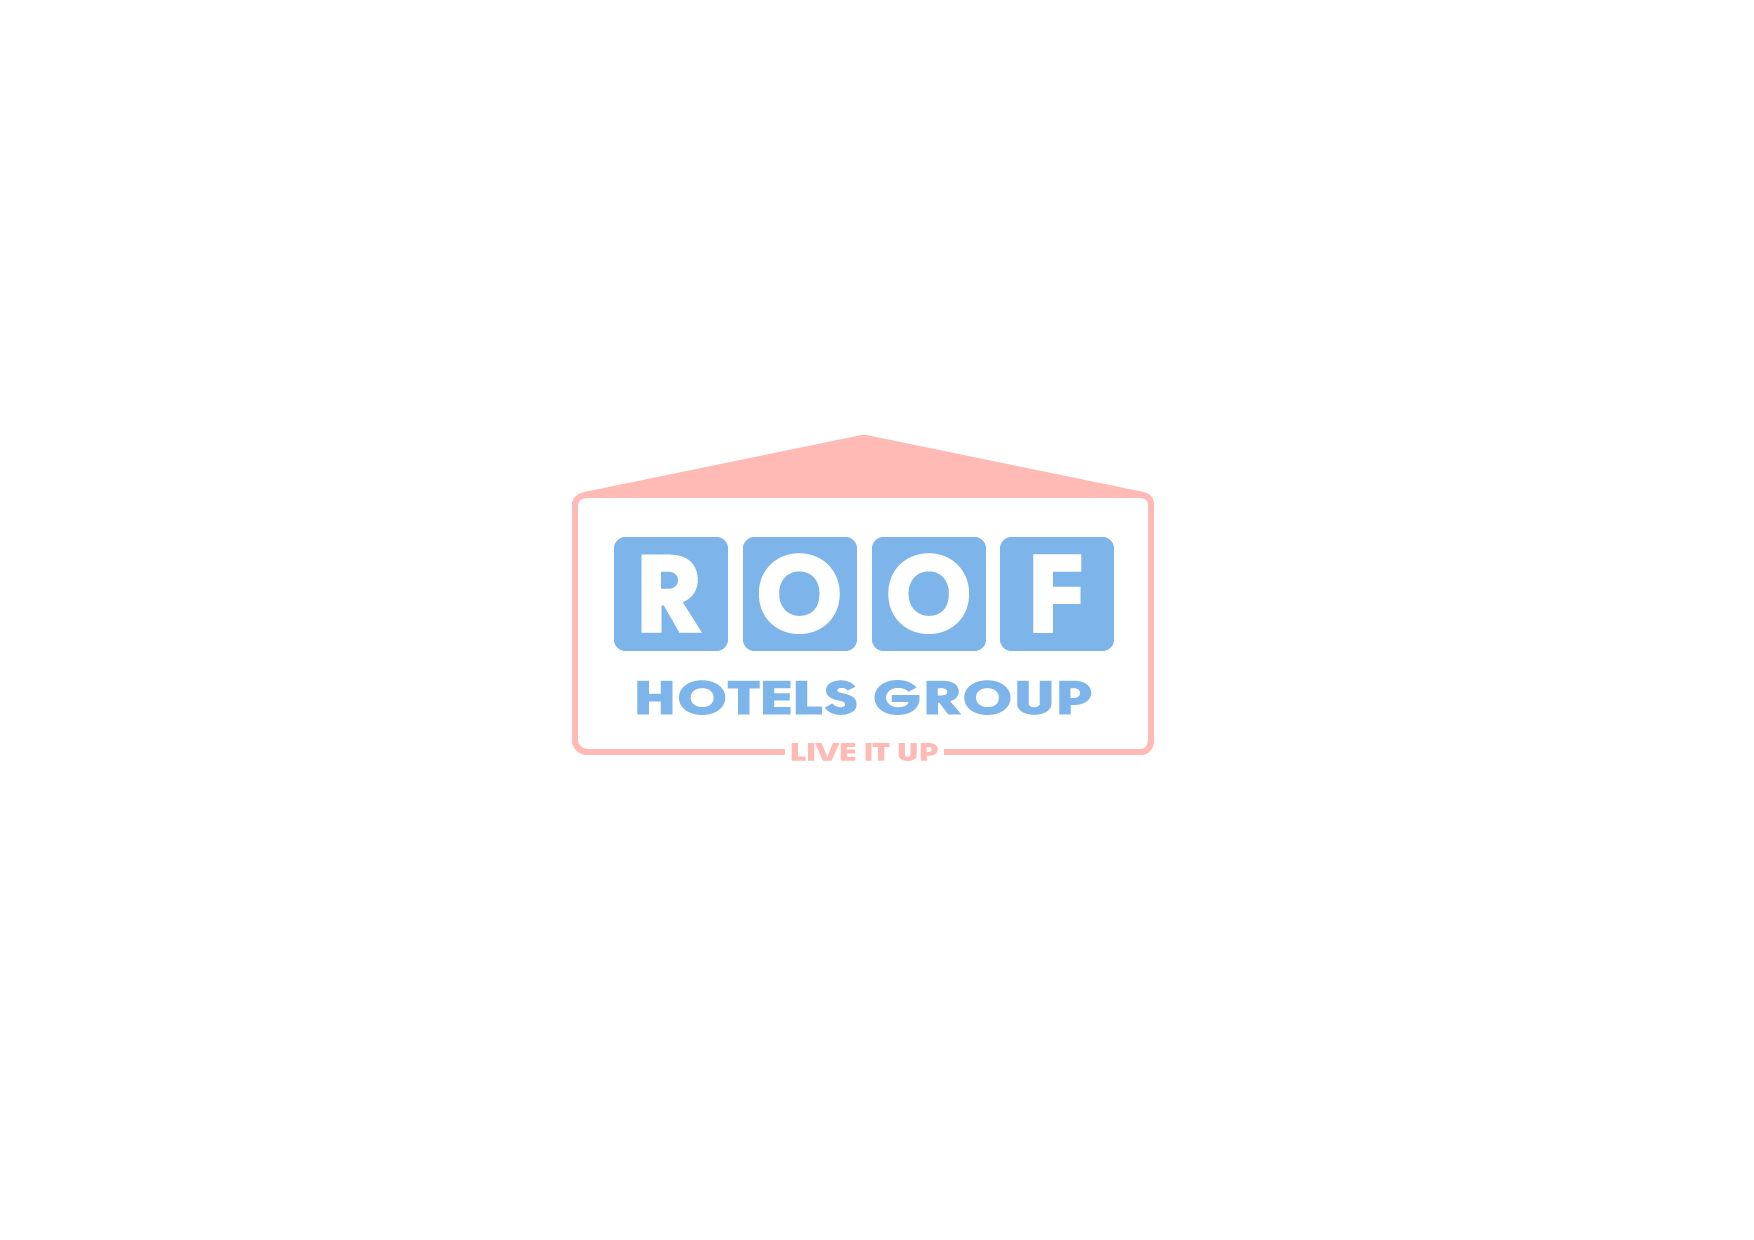 Логотип для Roof hotels group - дизайнер SANITARLESA